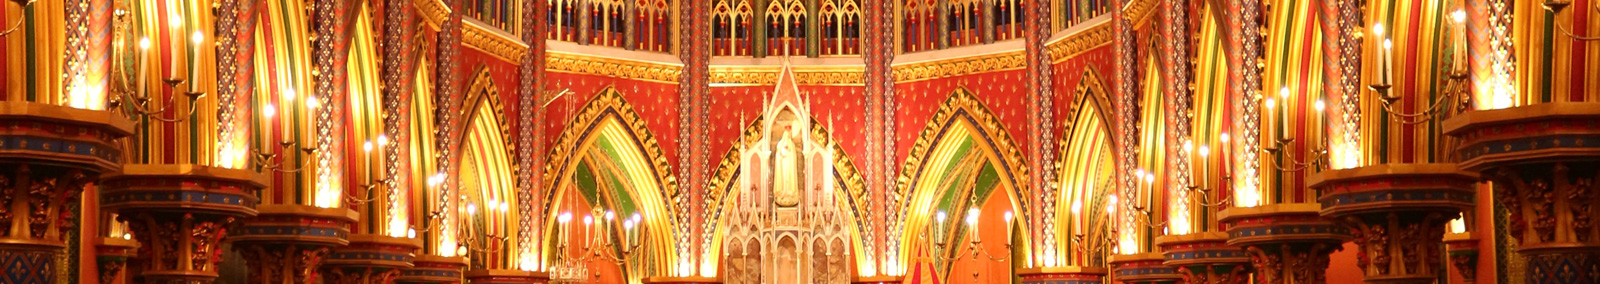 Beautifully lit up church interior